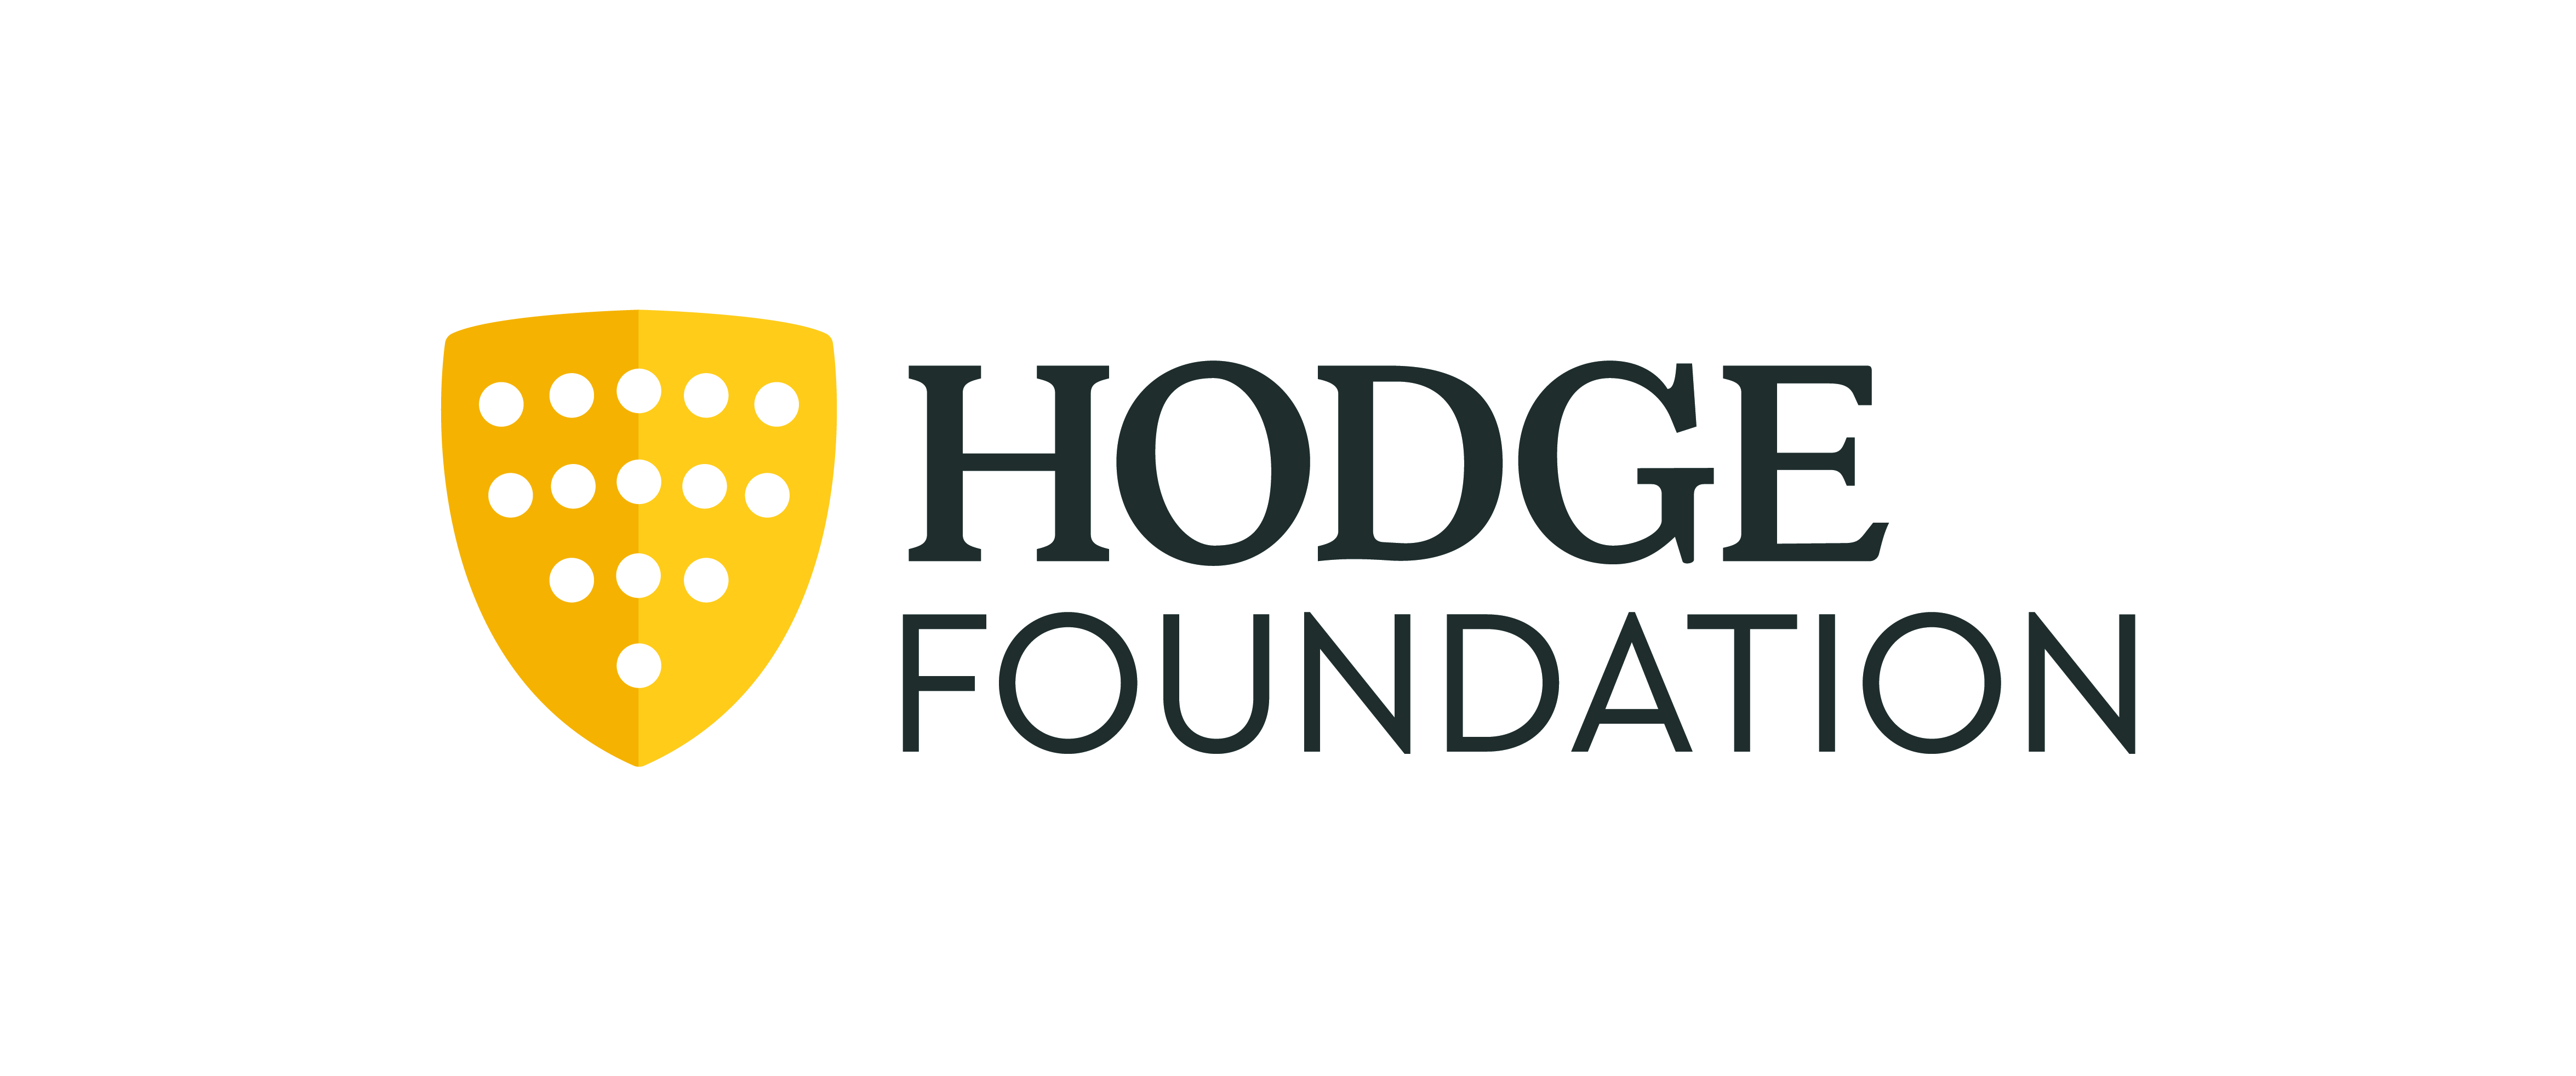 hddge foundation